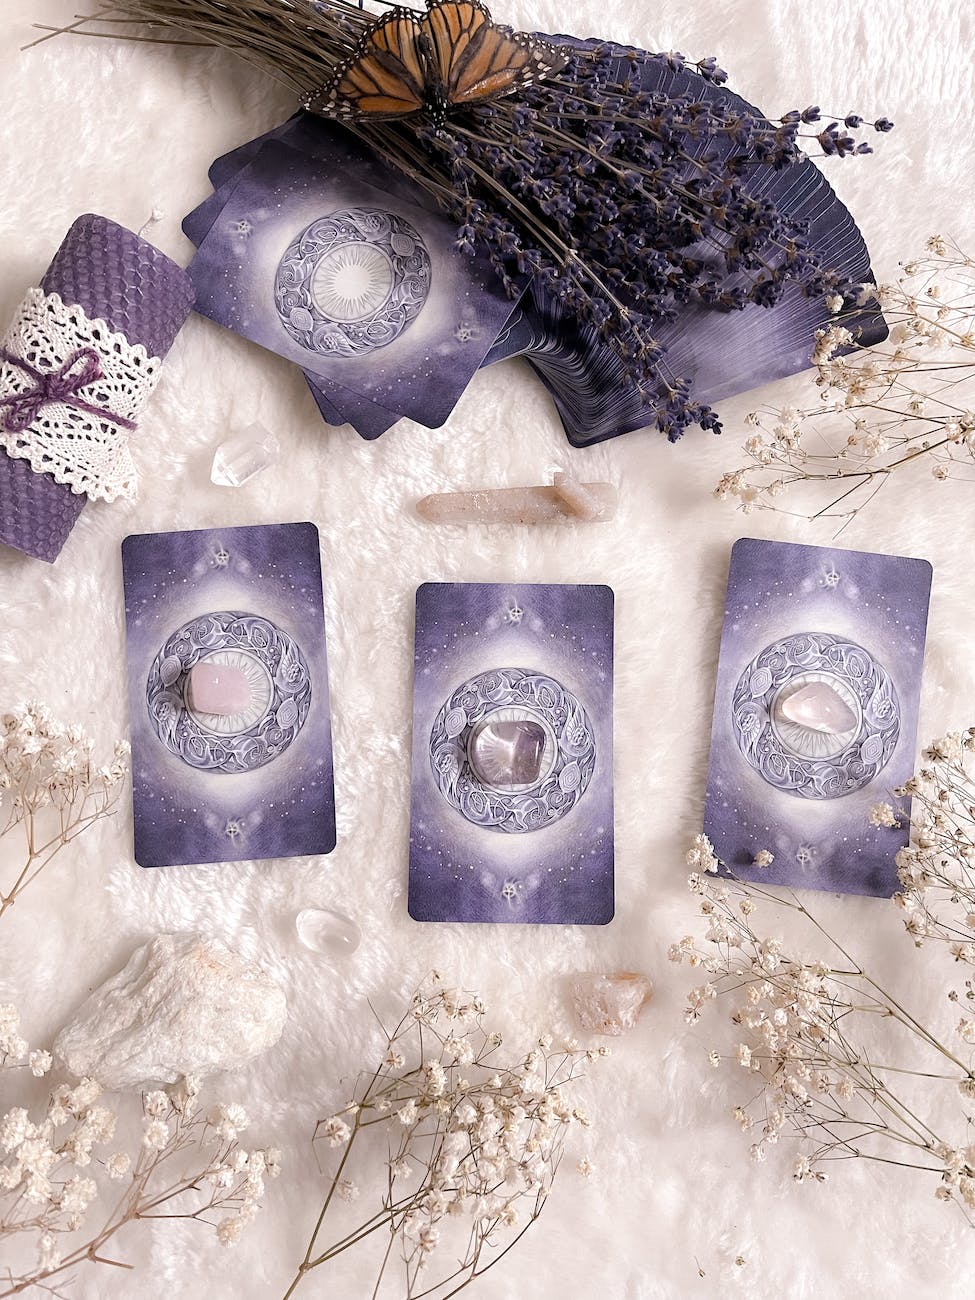 tarot cards and crystals